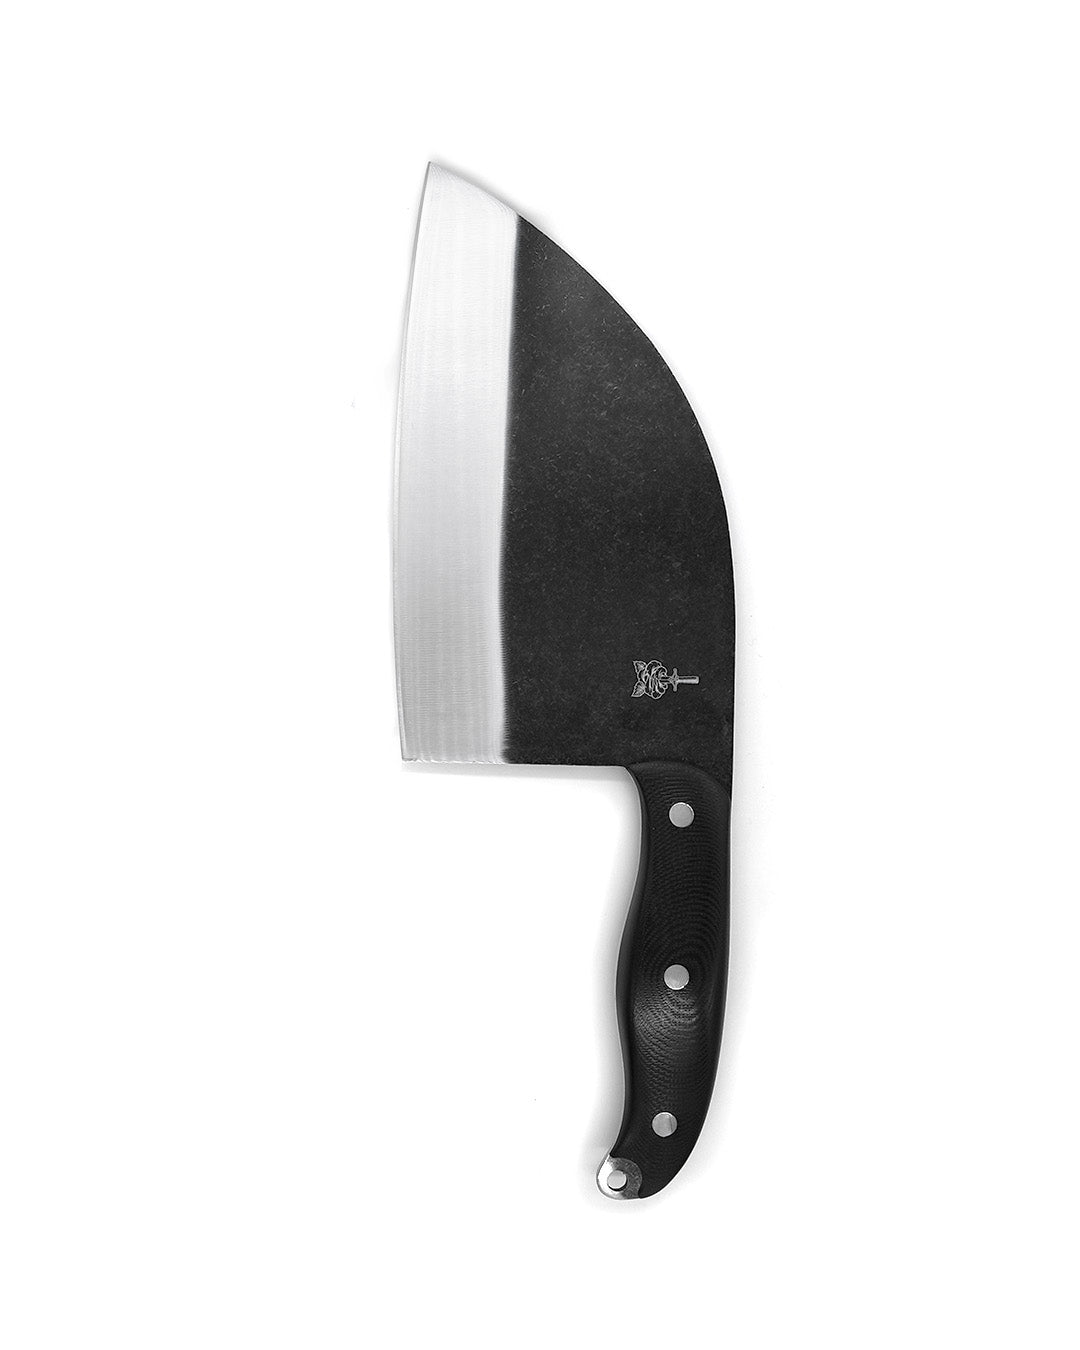 Upgrade Serbian Chef Knife